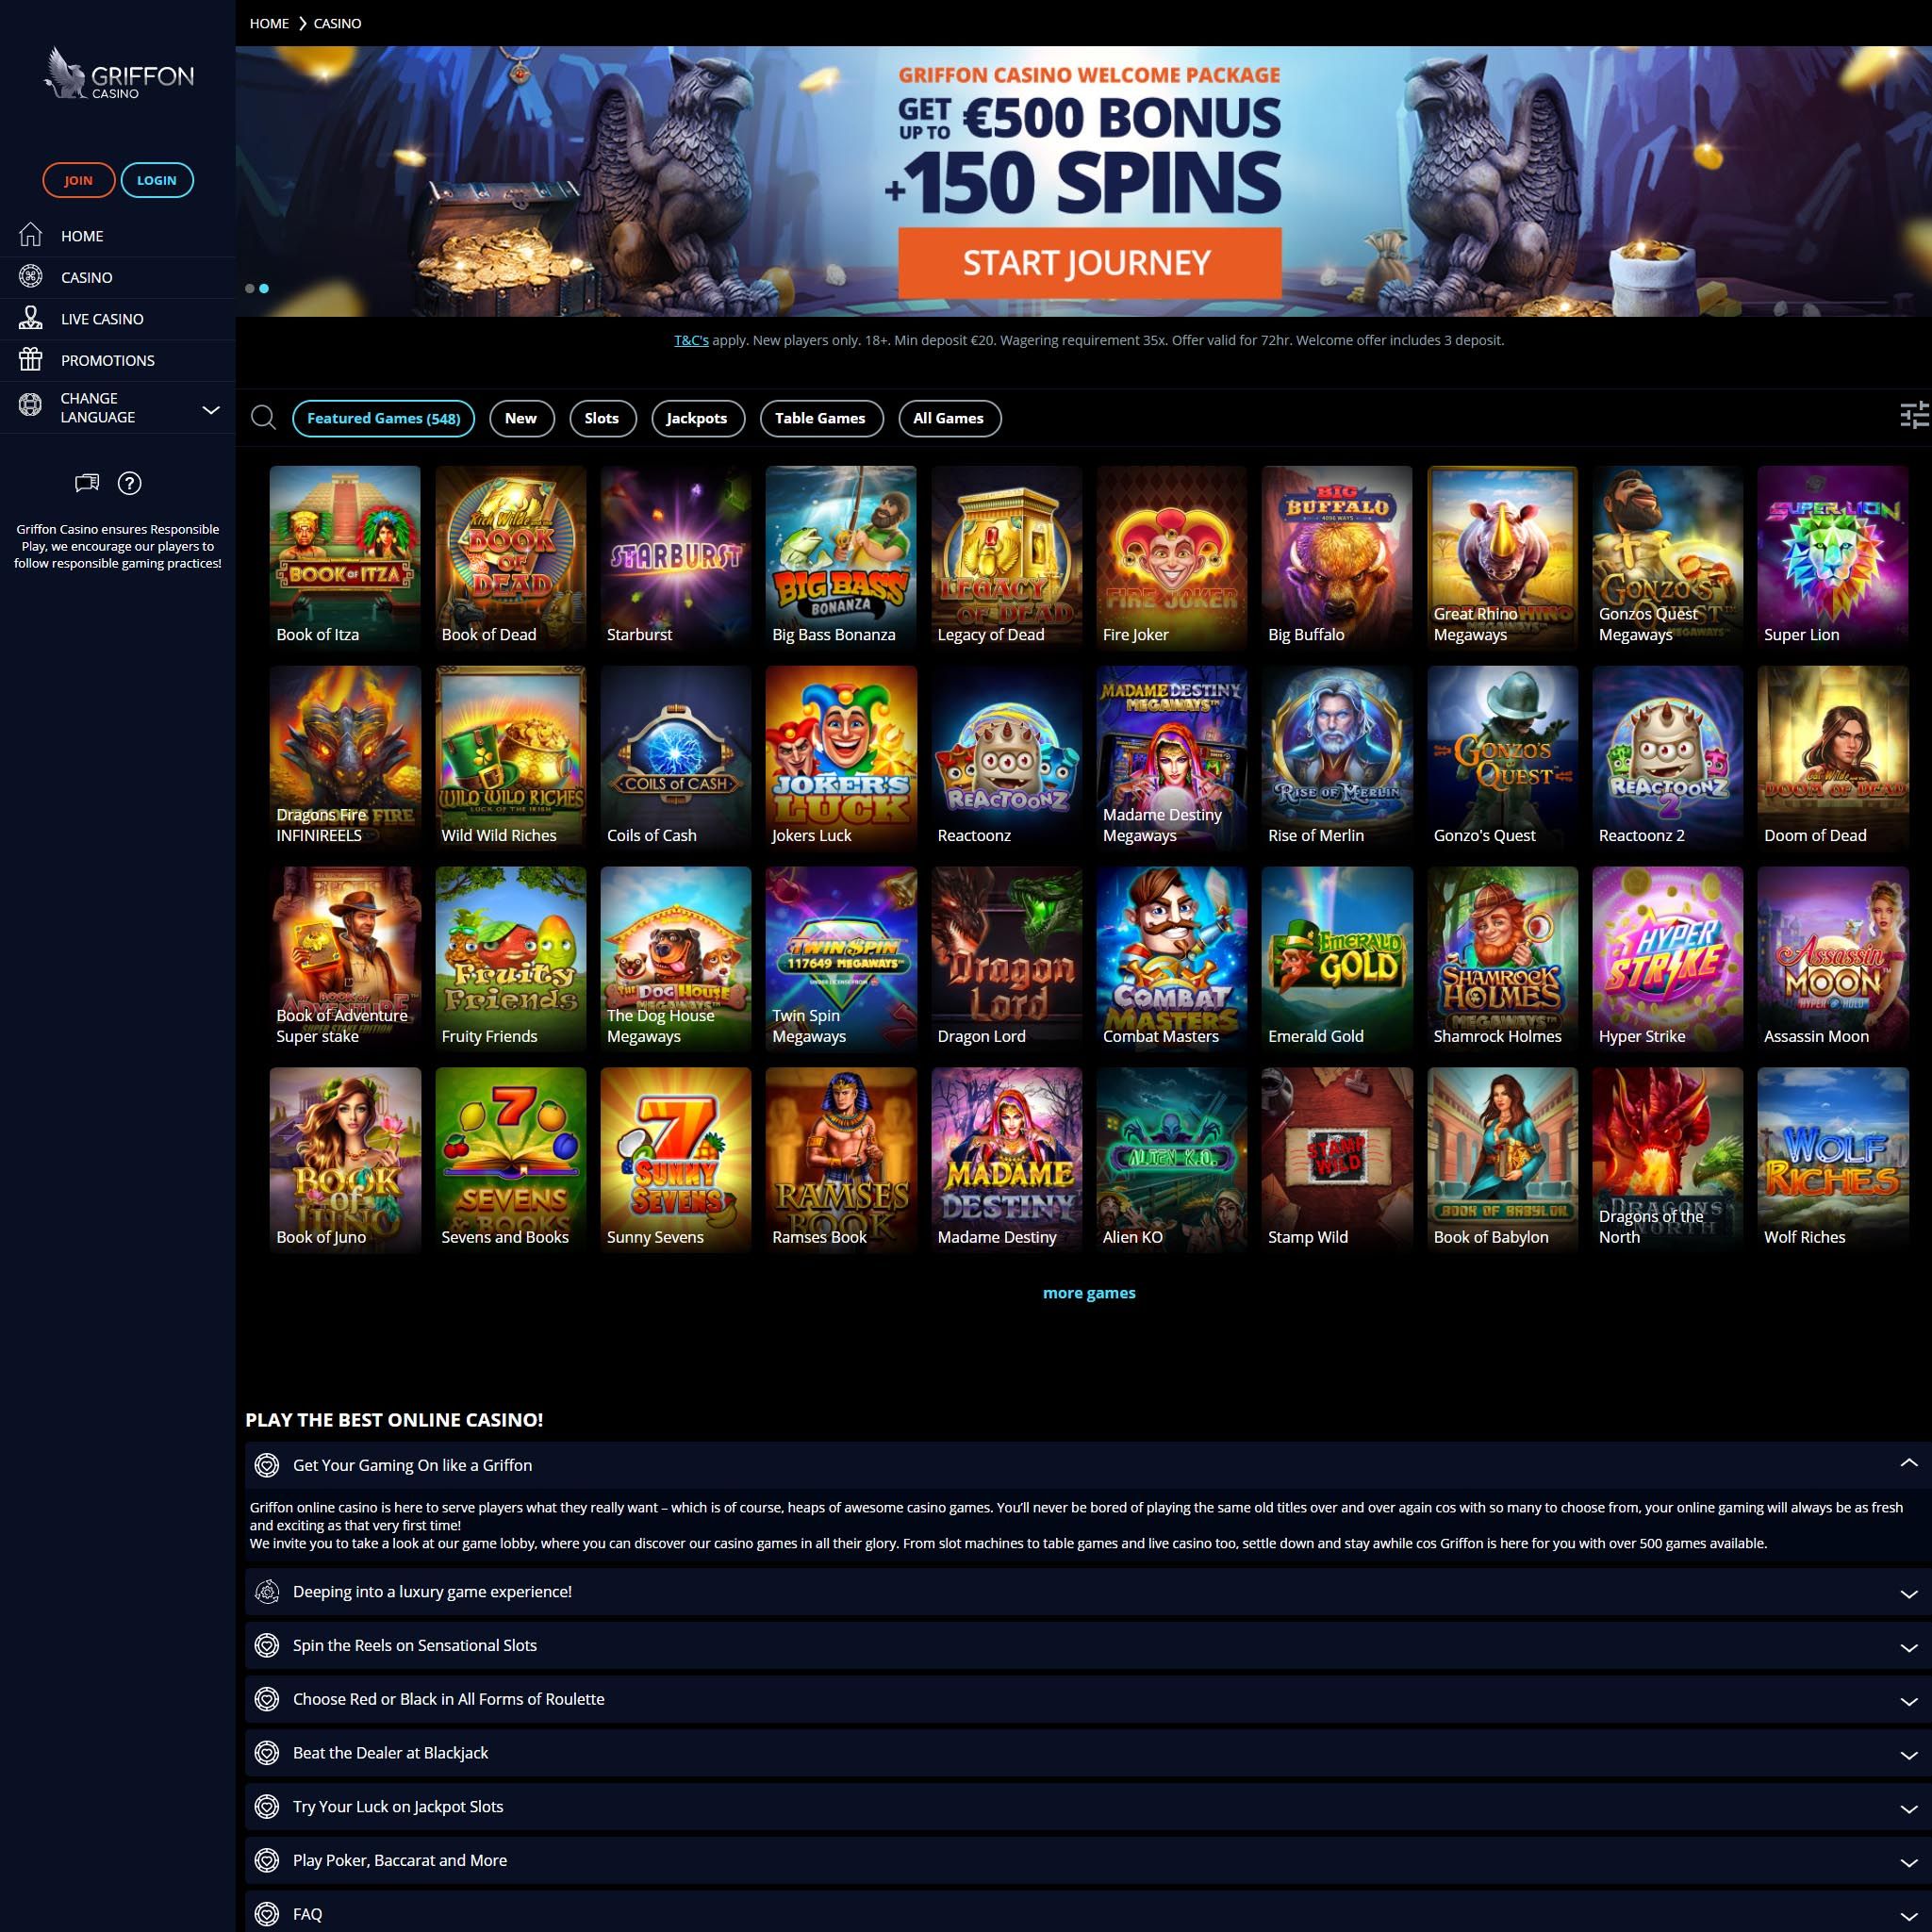 Griffon Casino full games catalogue